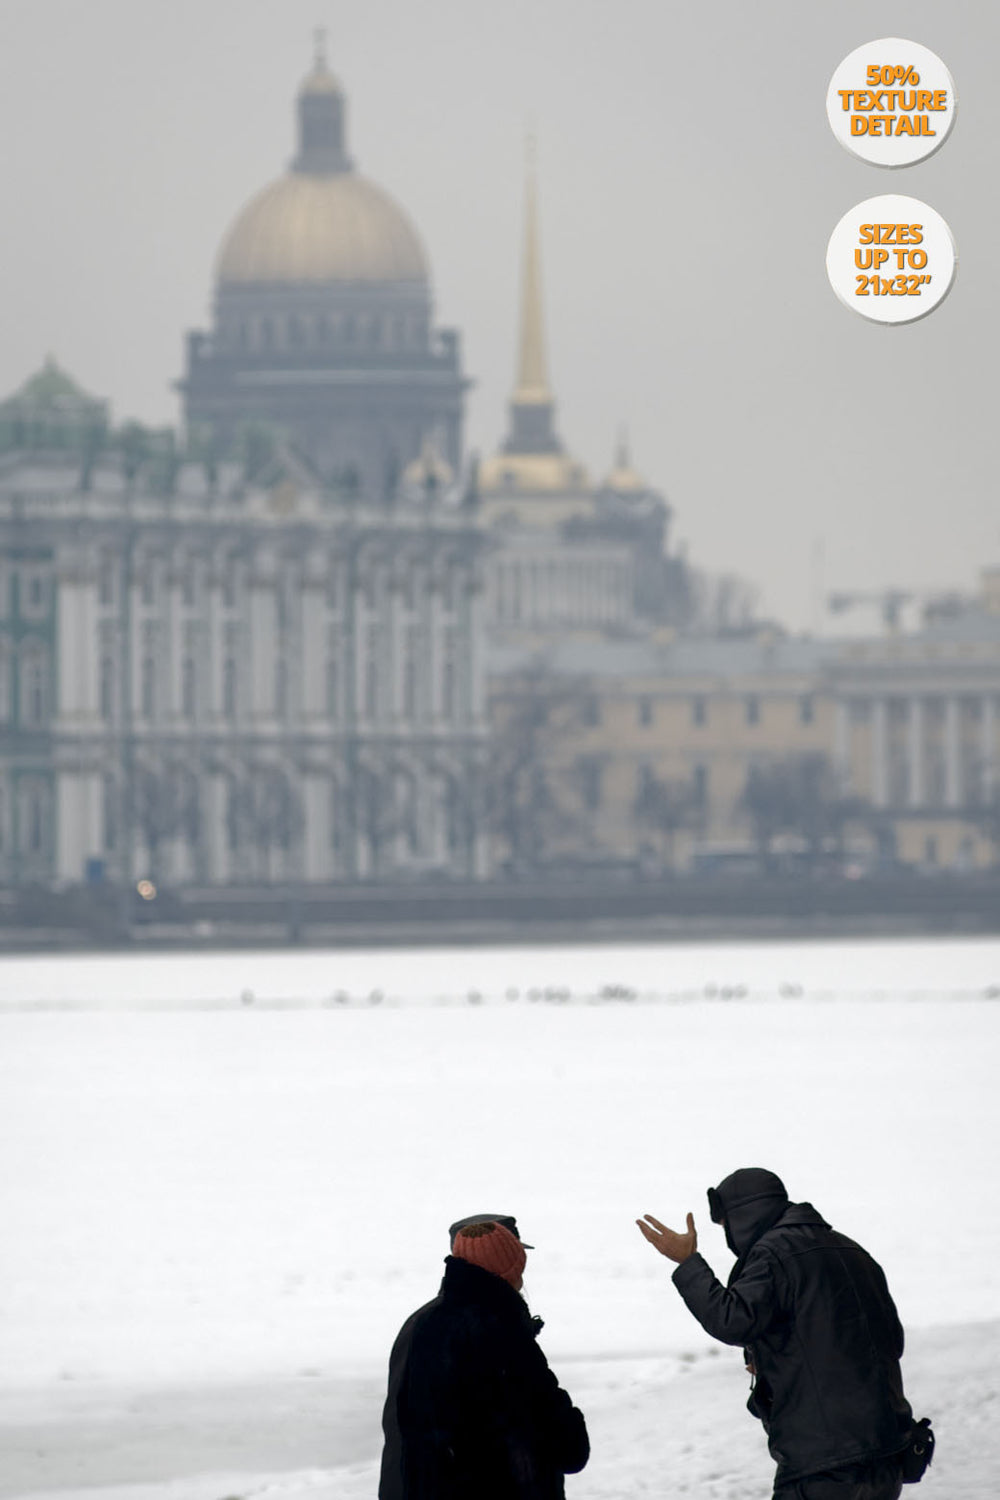 Pedestrians chatting over Frozen Neva River, St. Petersbourg. | 50% Print Detail.